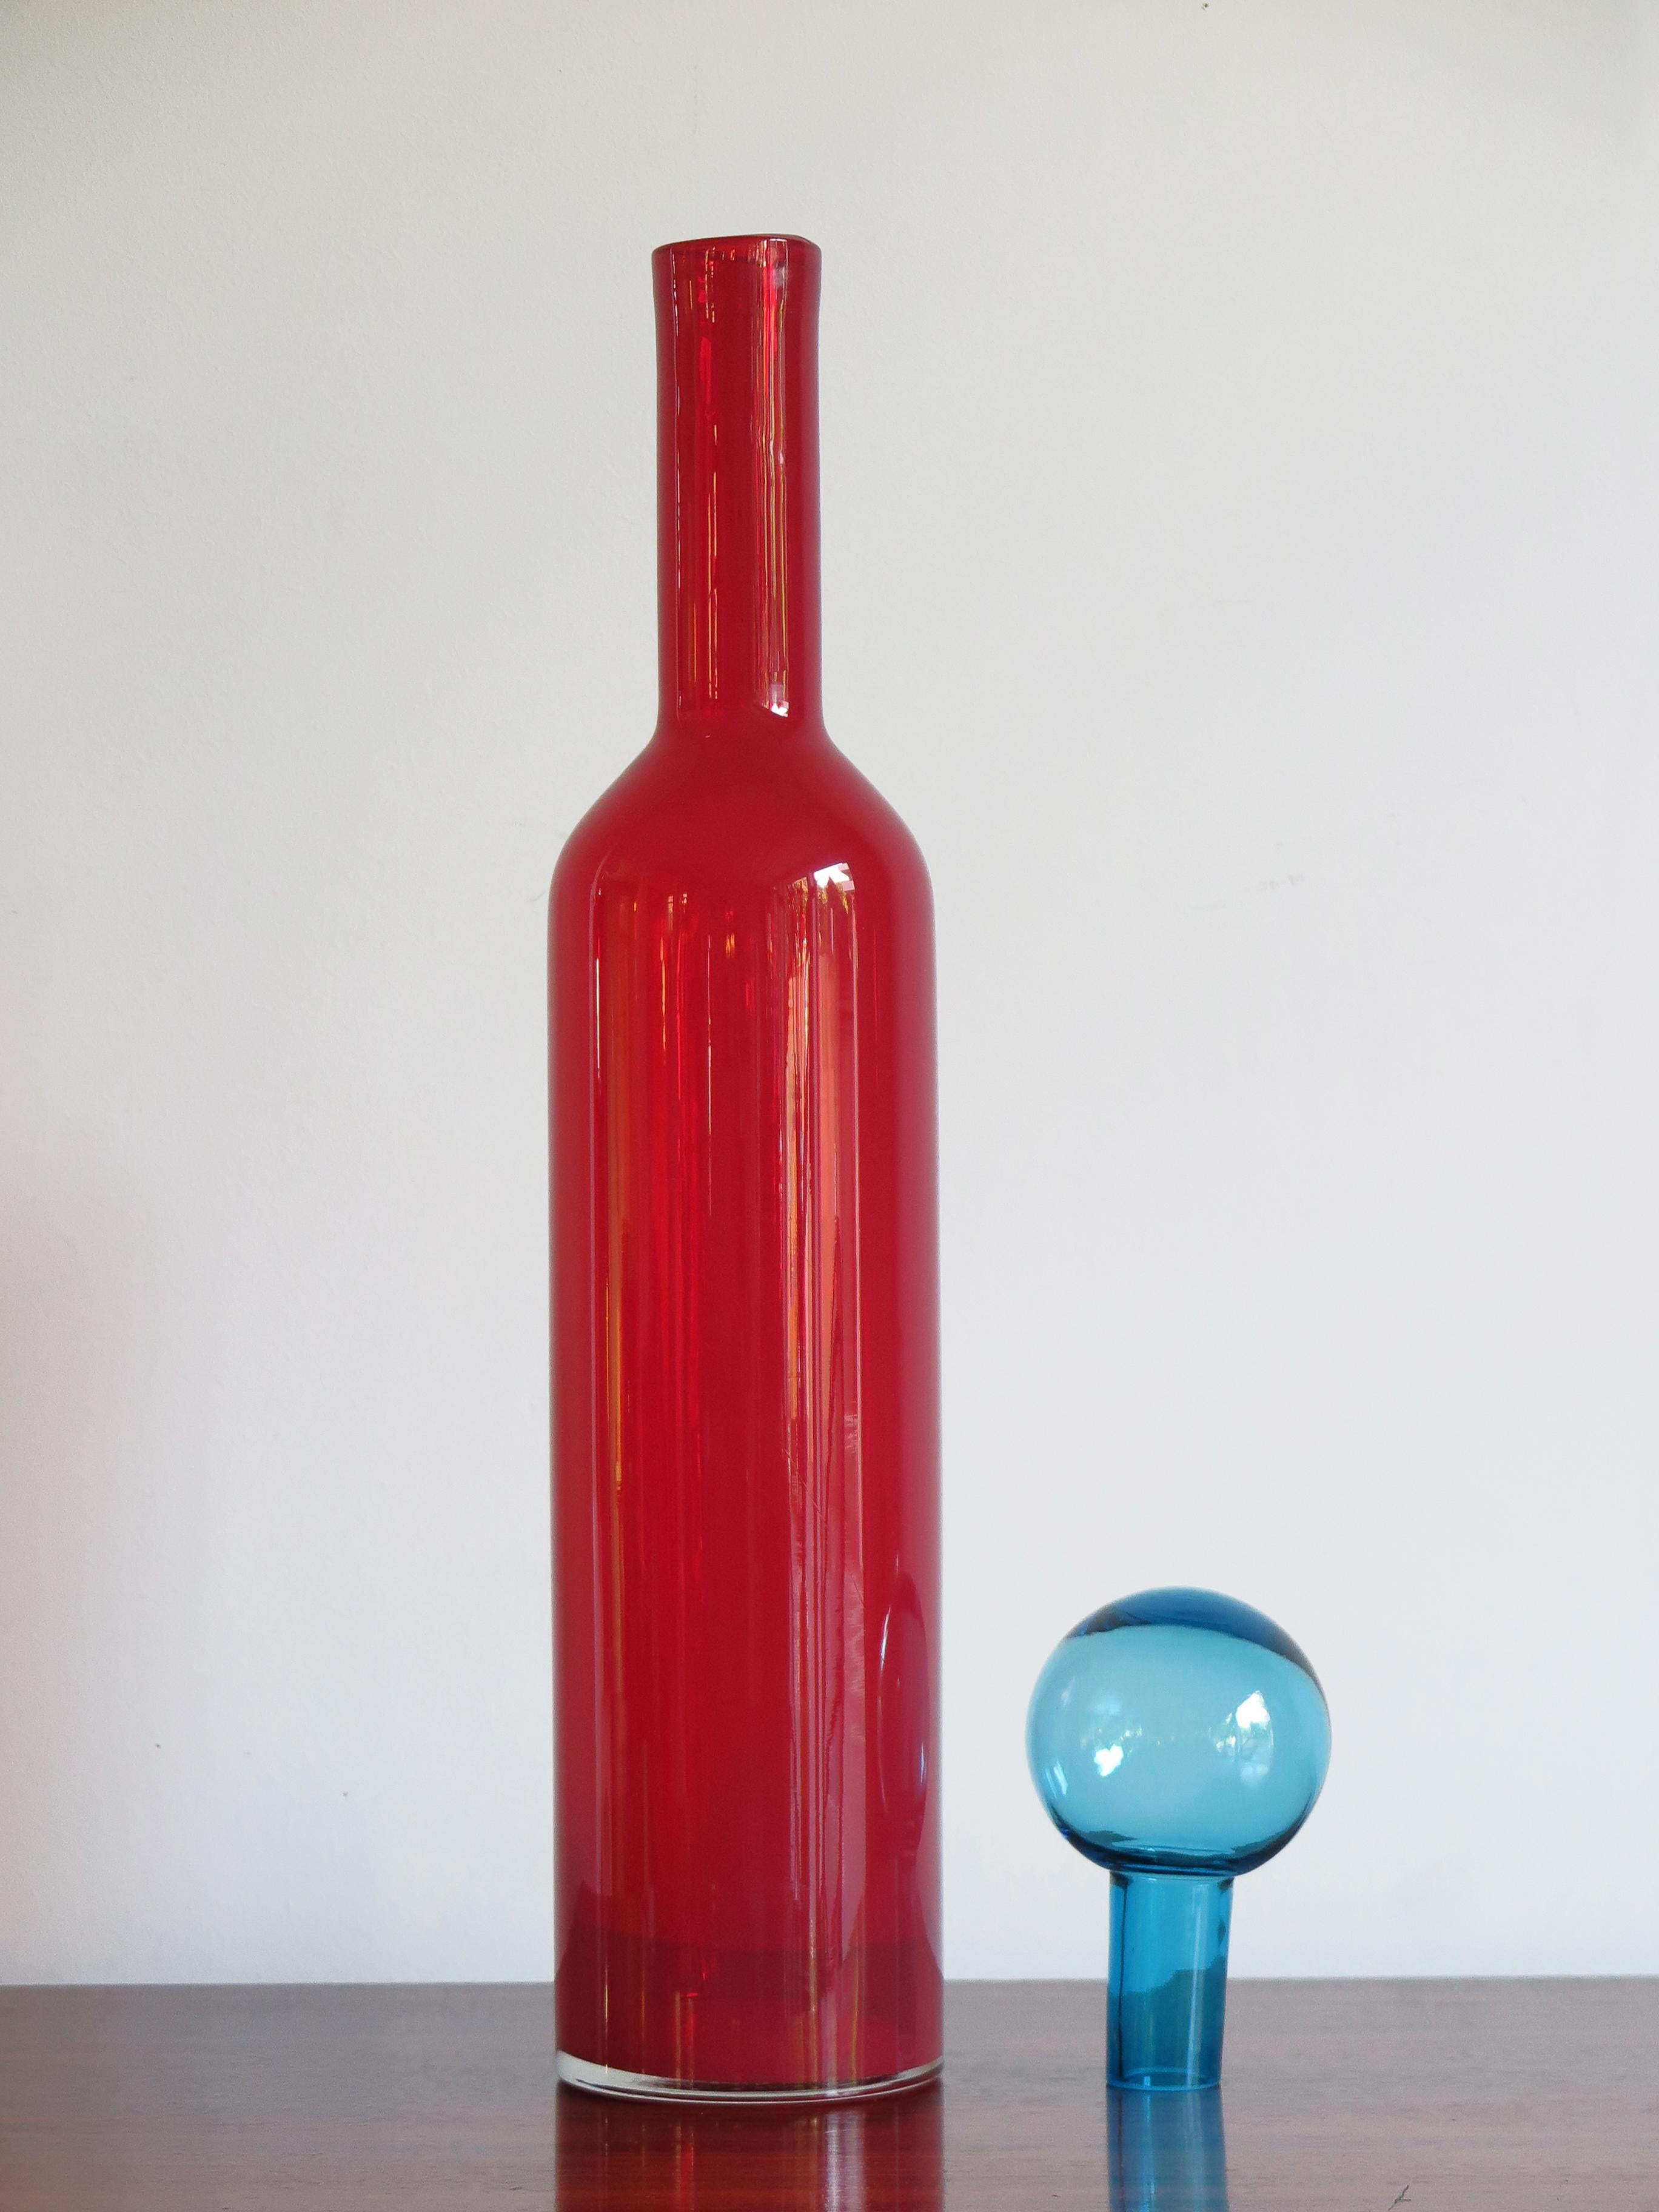 Italian very big modern red blown glass vase or bottle produced in Murano Venezia, 2000s.
  